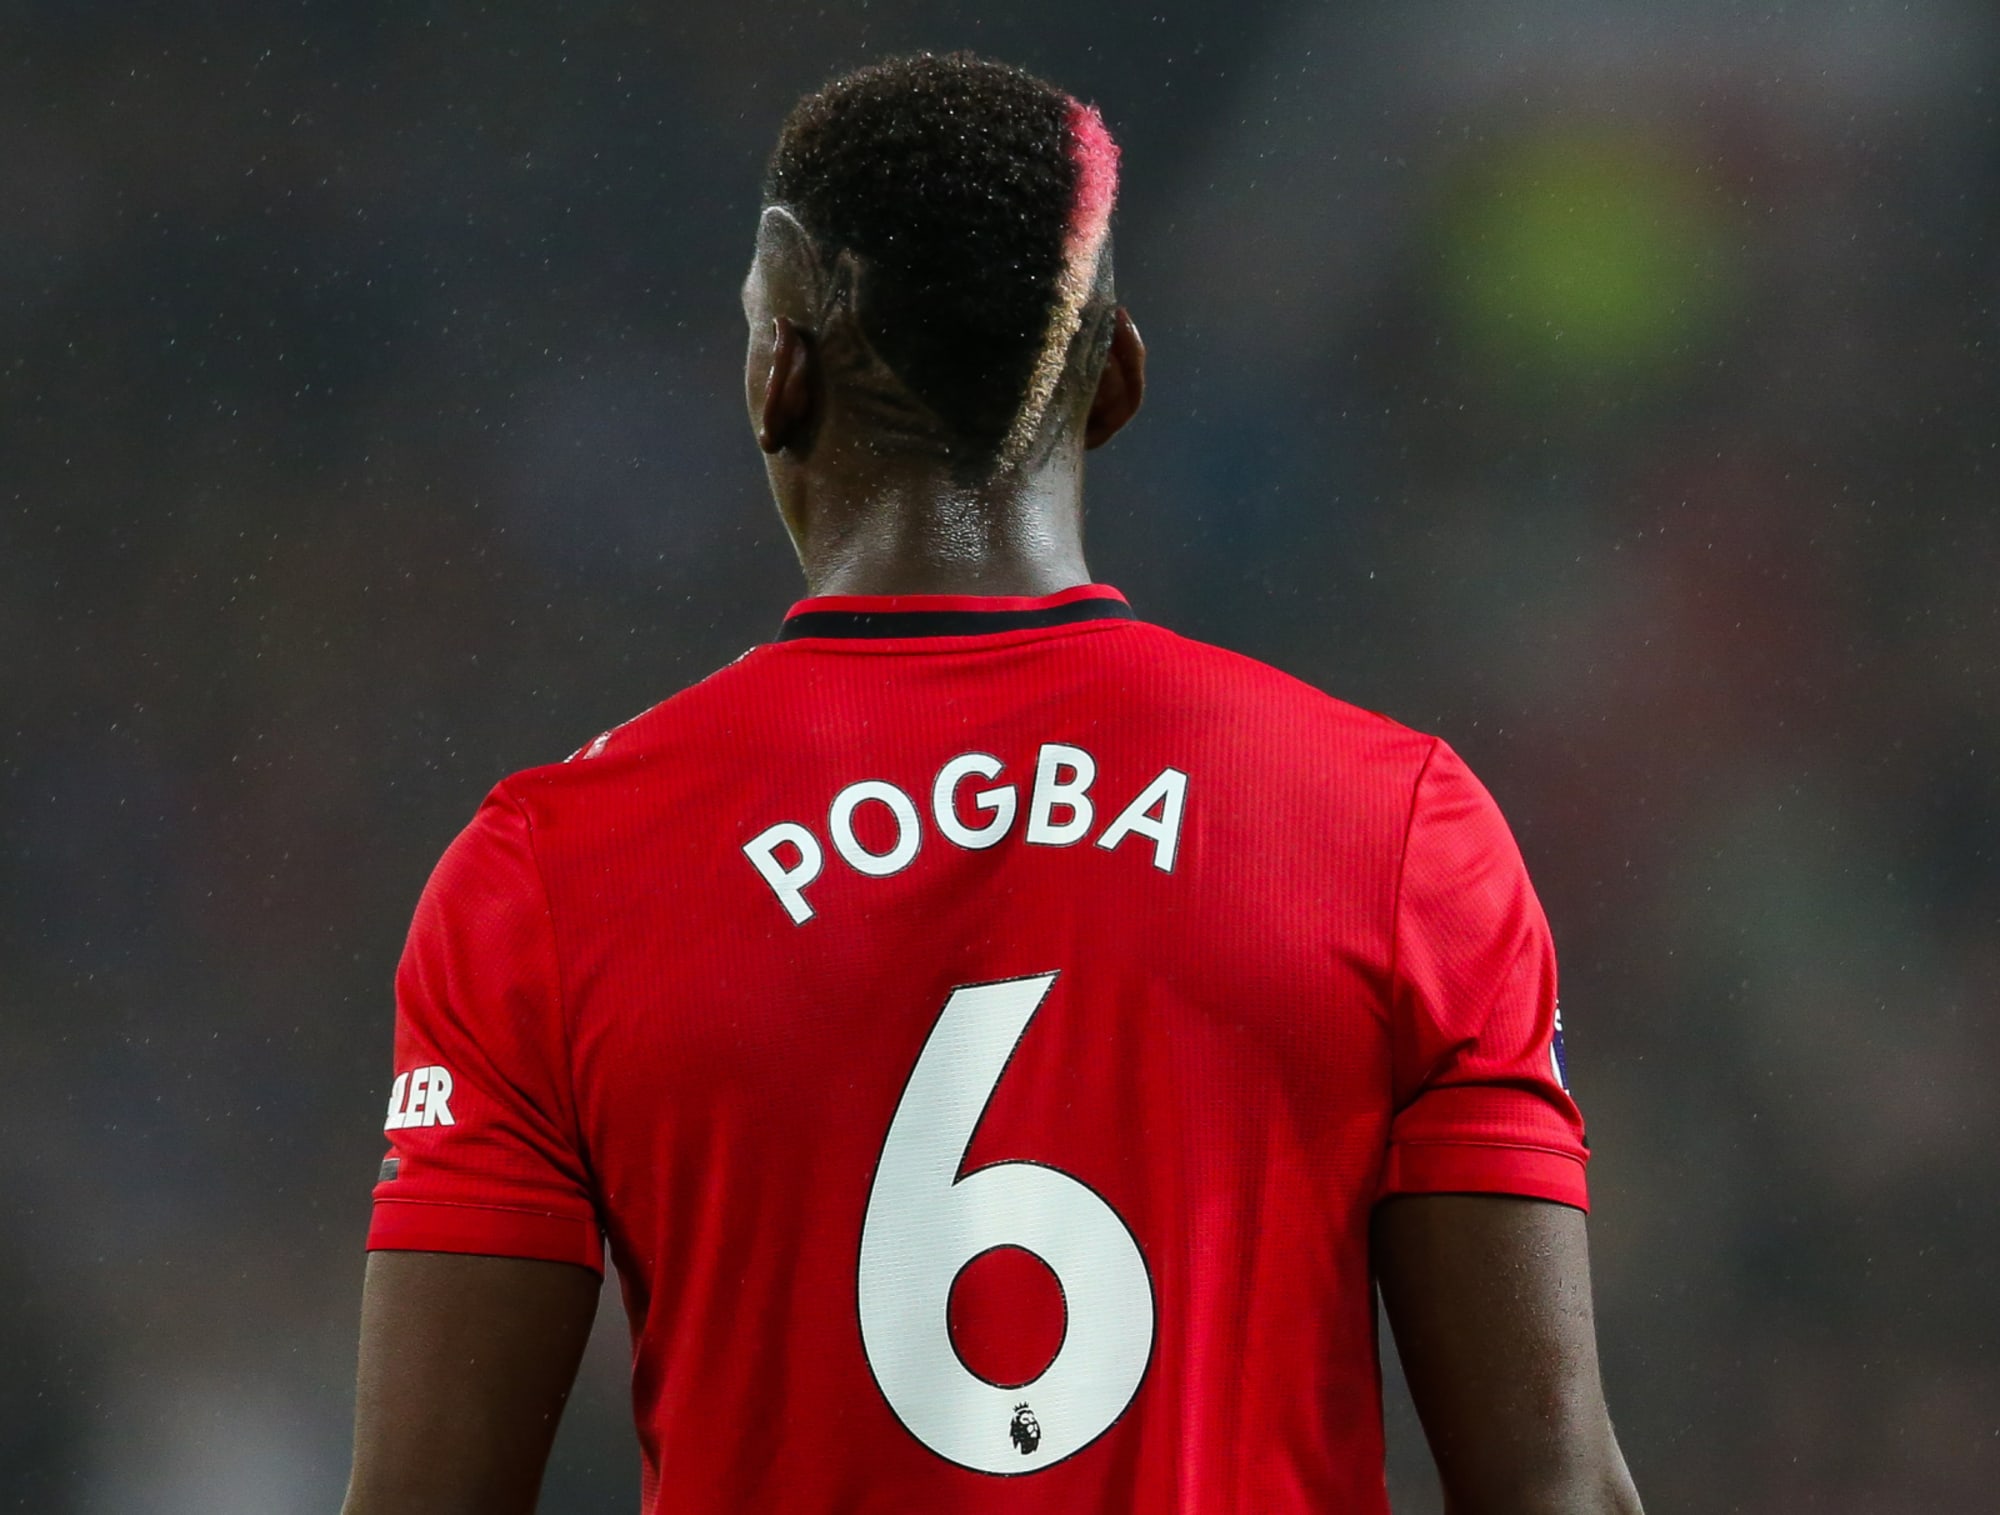 Paul Pogba Always Comes Back